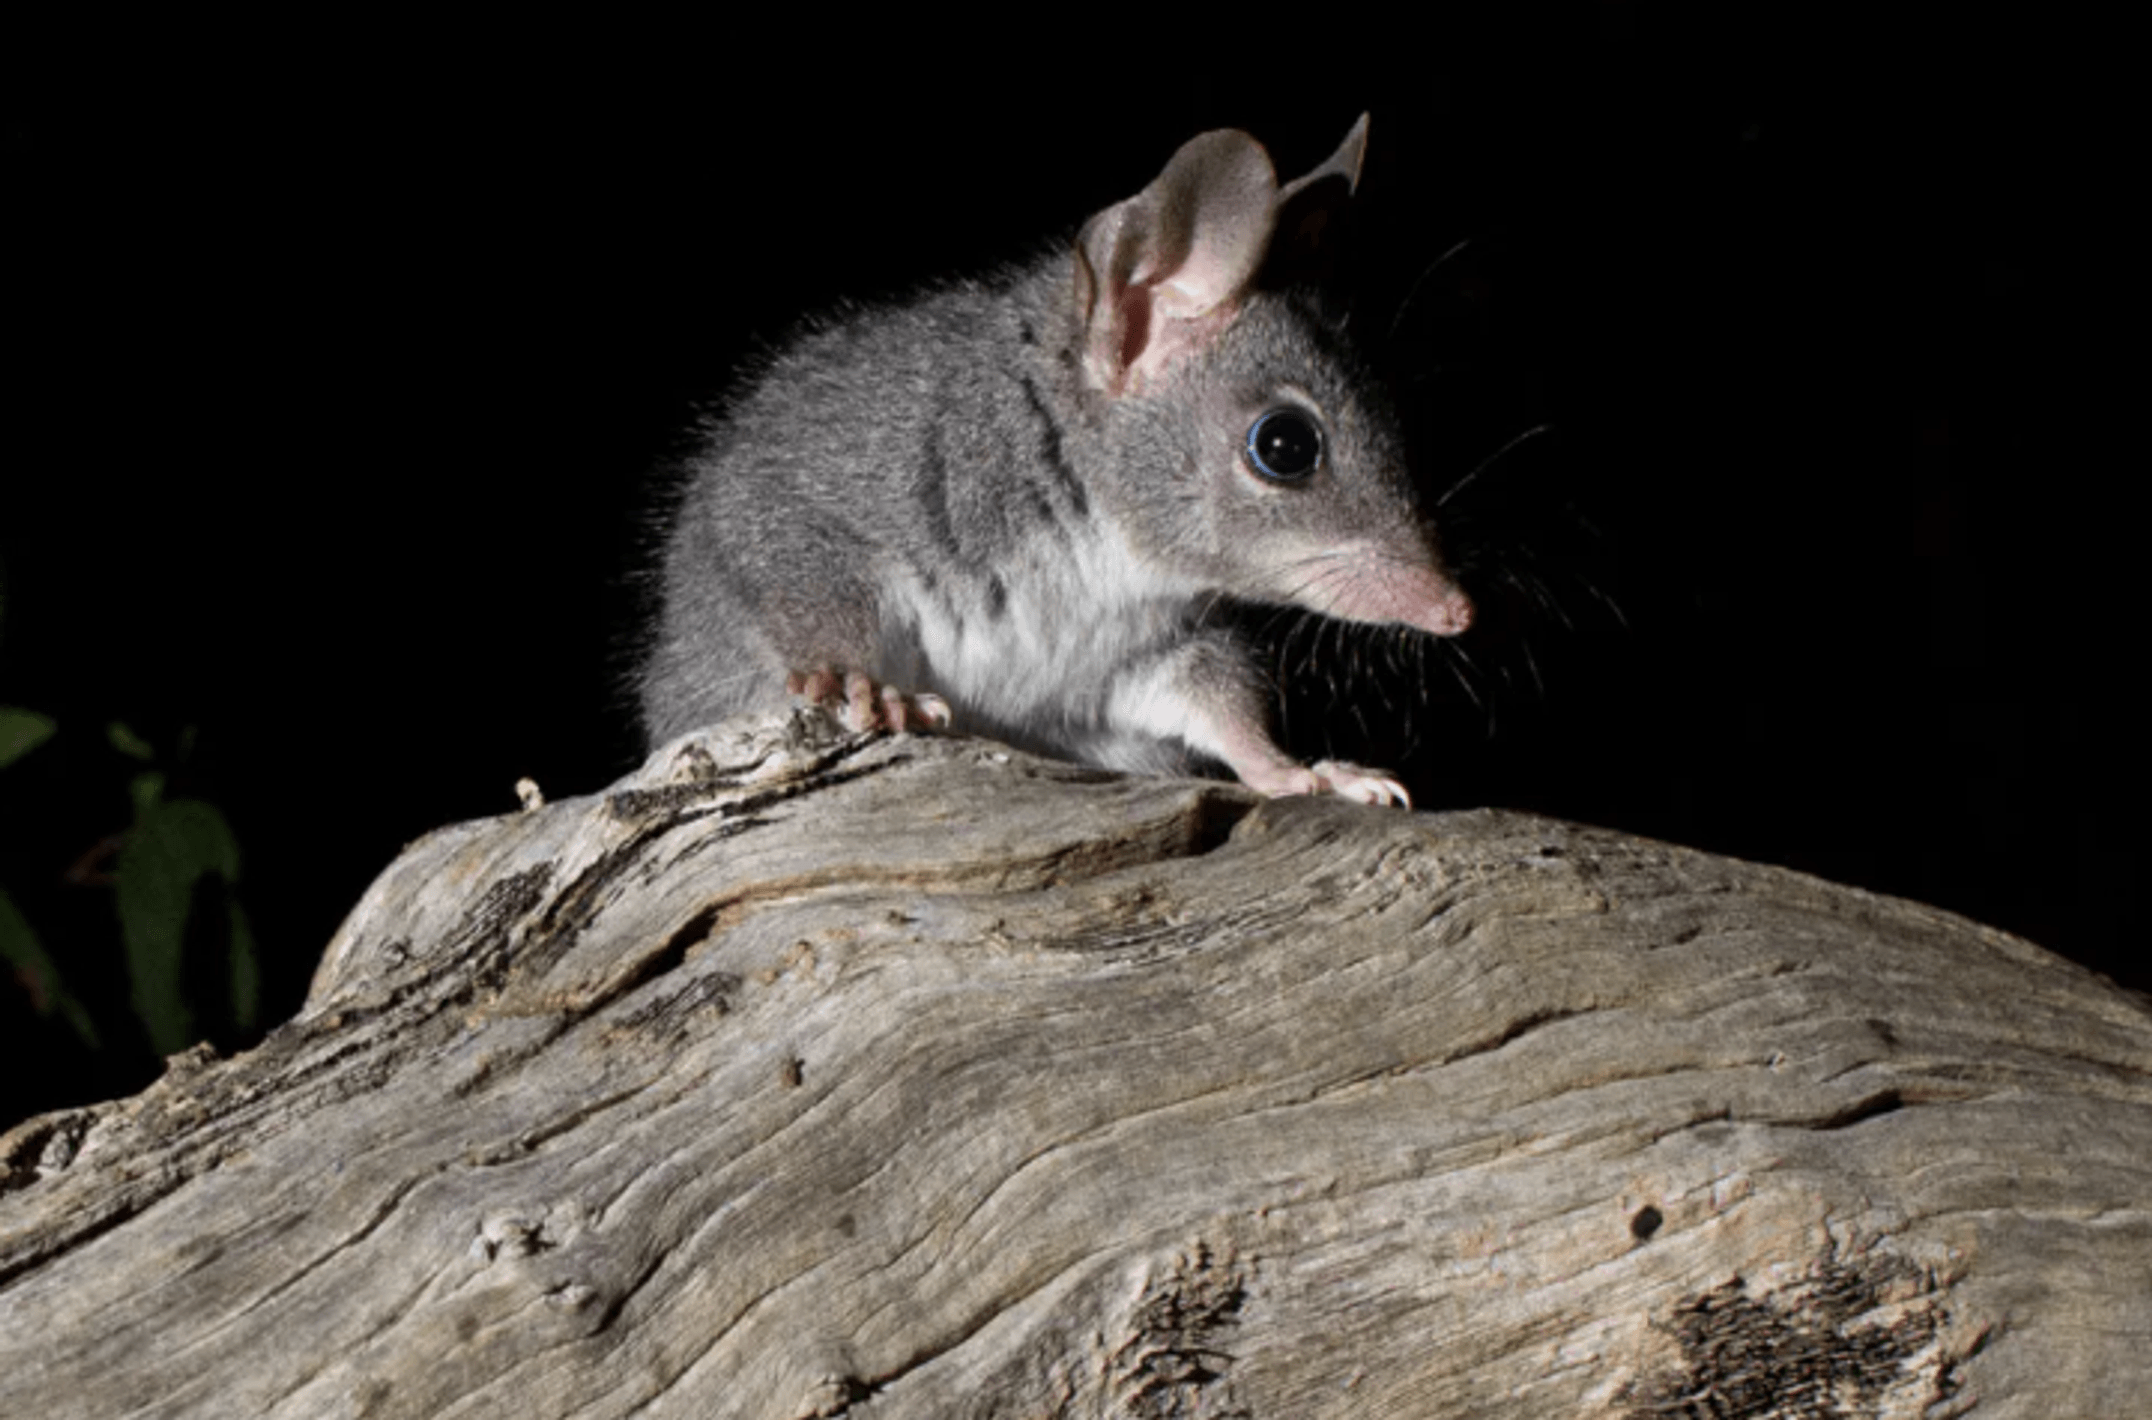 A small mouse-like, tree climbing marsupial